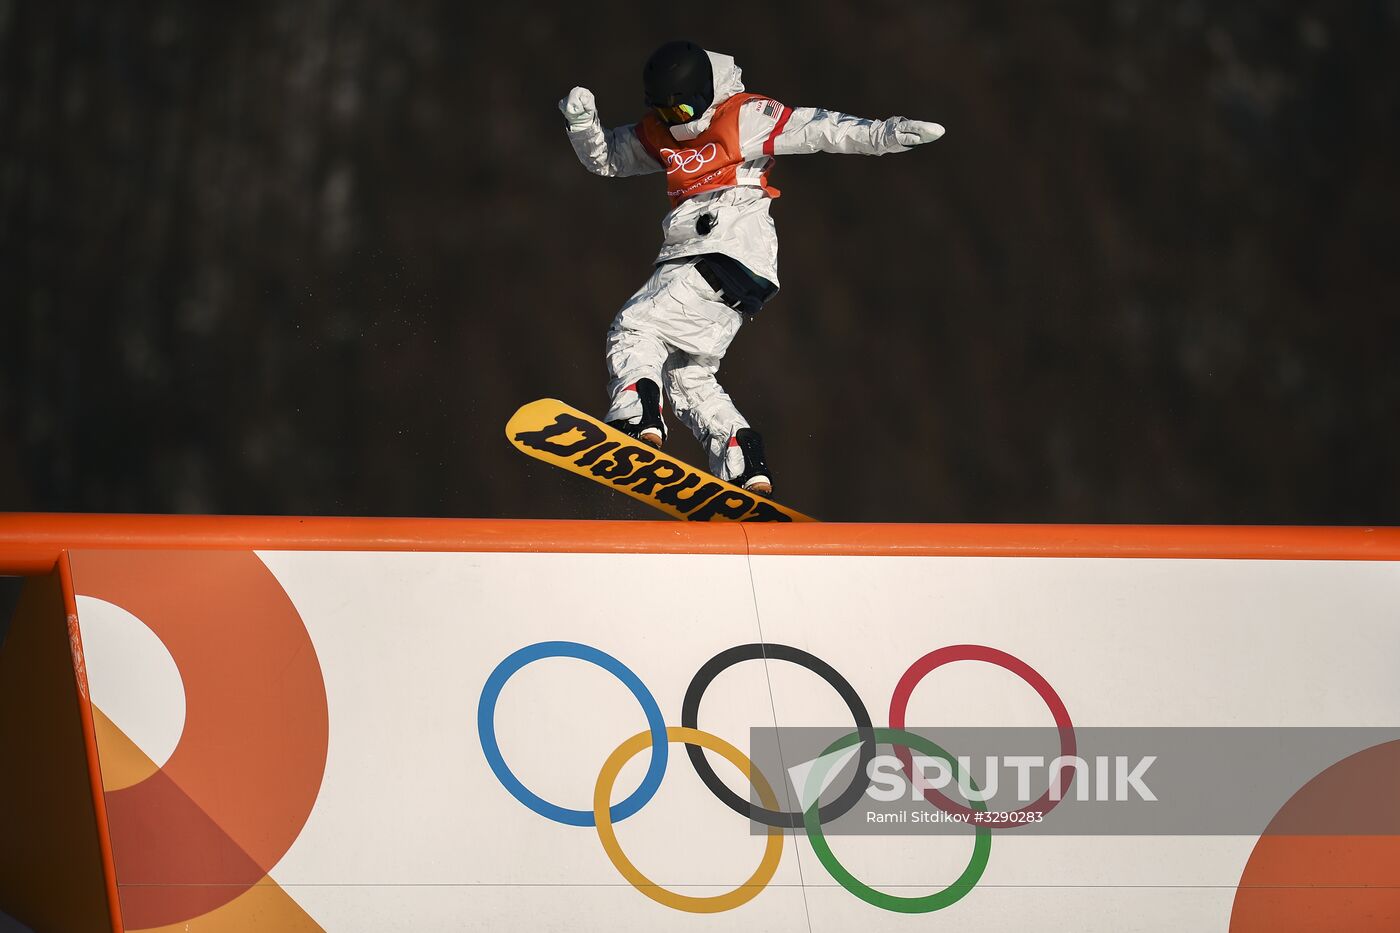 2018 Winter Olympics. Snowboarding. Slopestyle. Training sessions